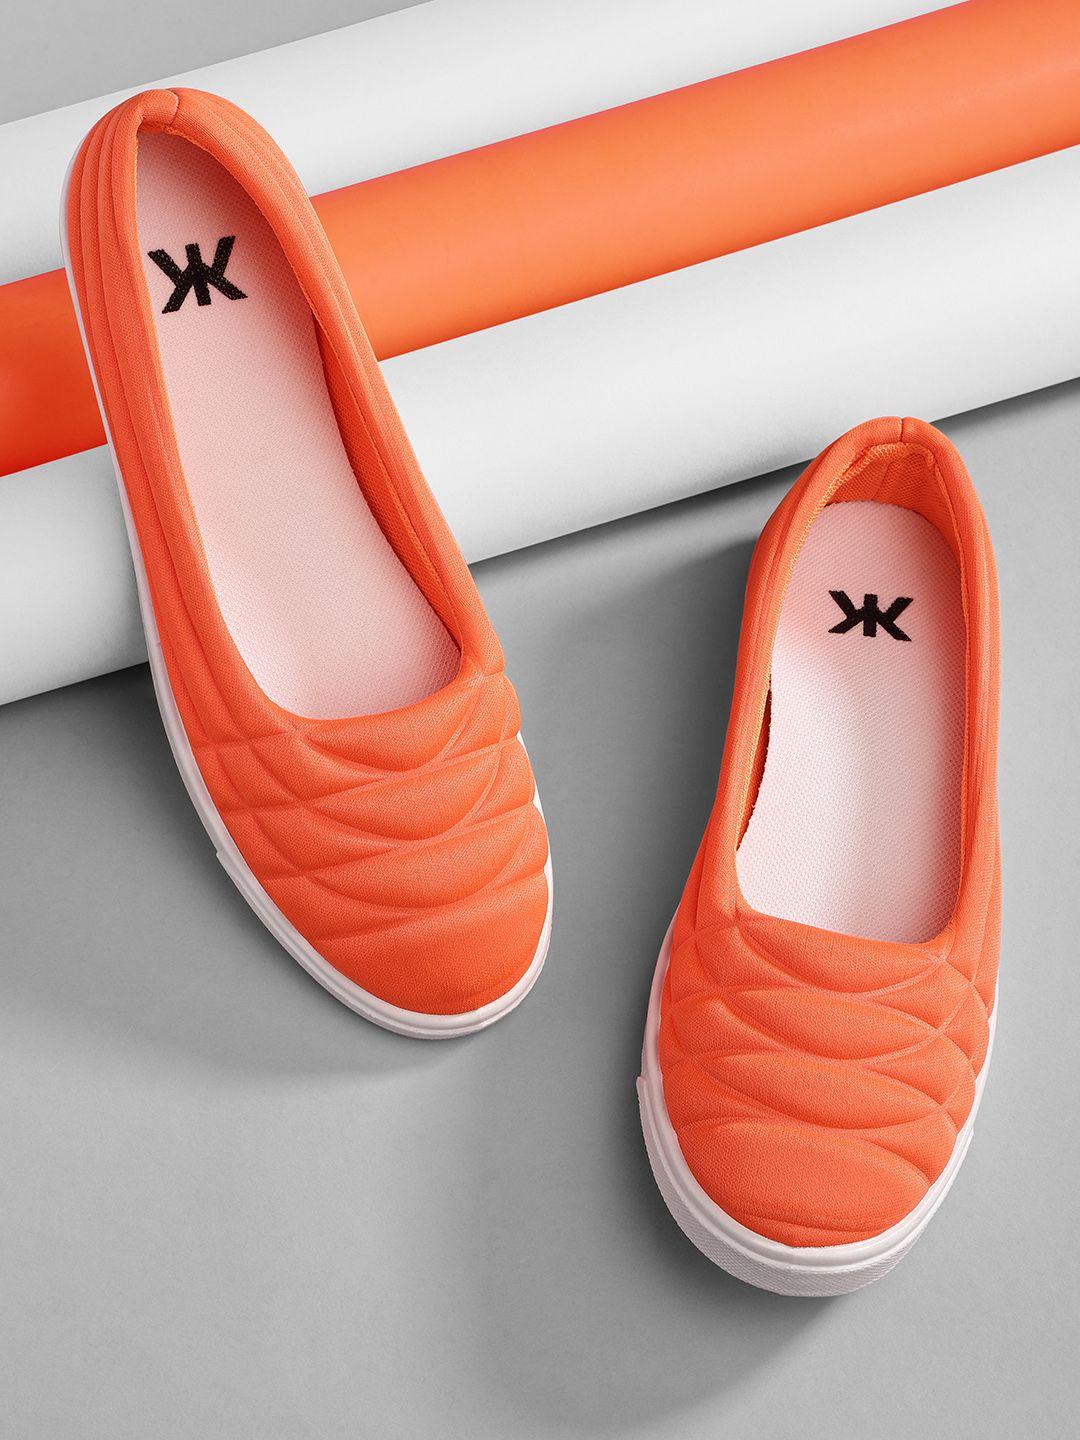 kook-n-keech-women-orange-quilted-ballerinas